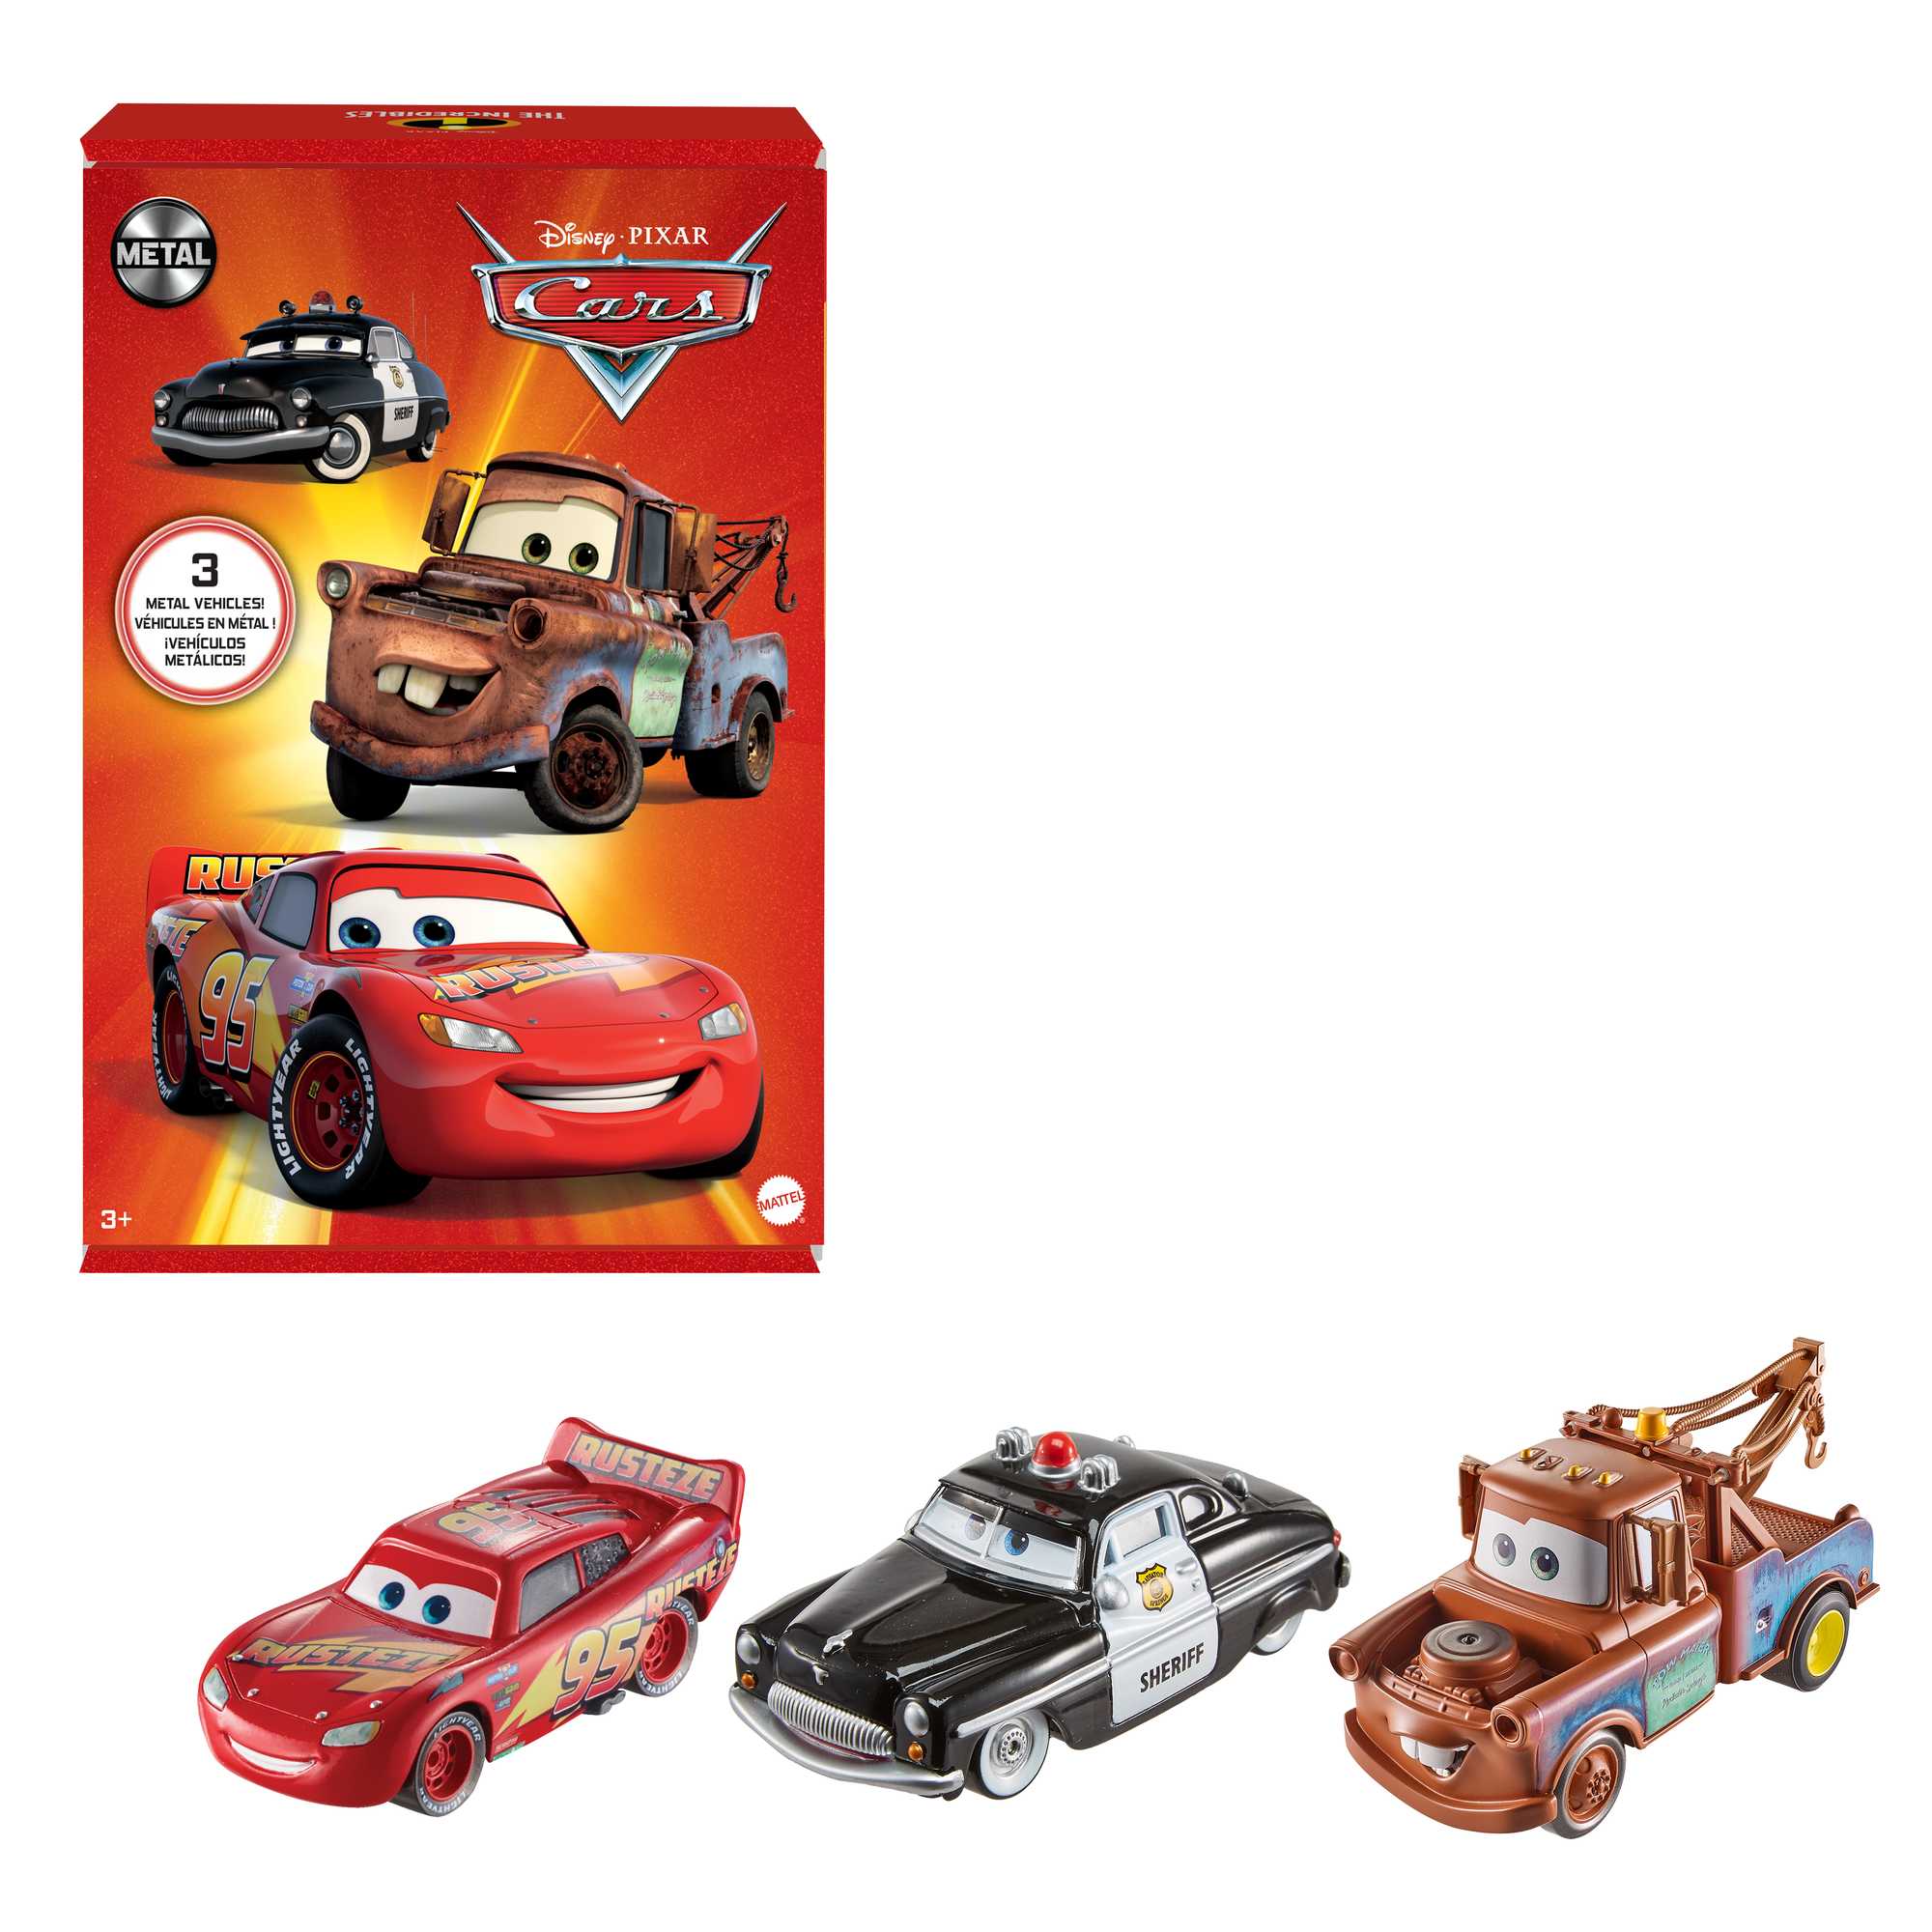 Disney Cars Mater Vehicle - English Edition